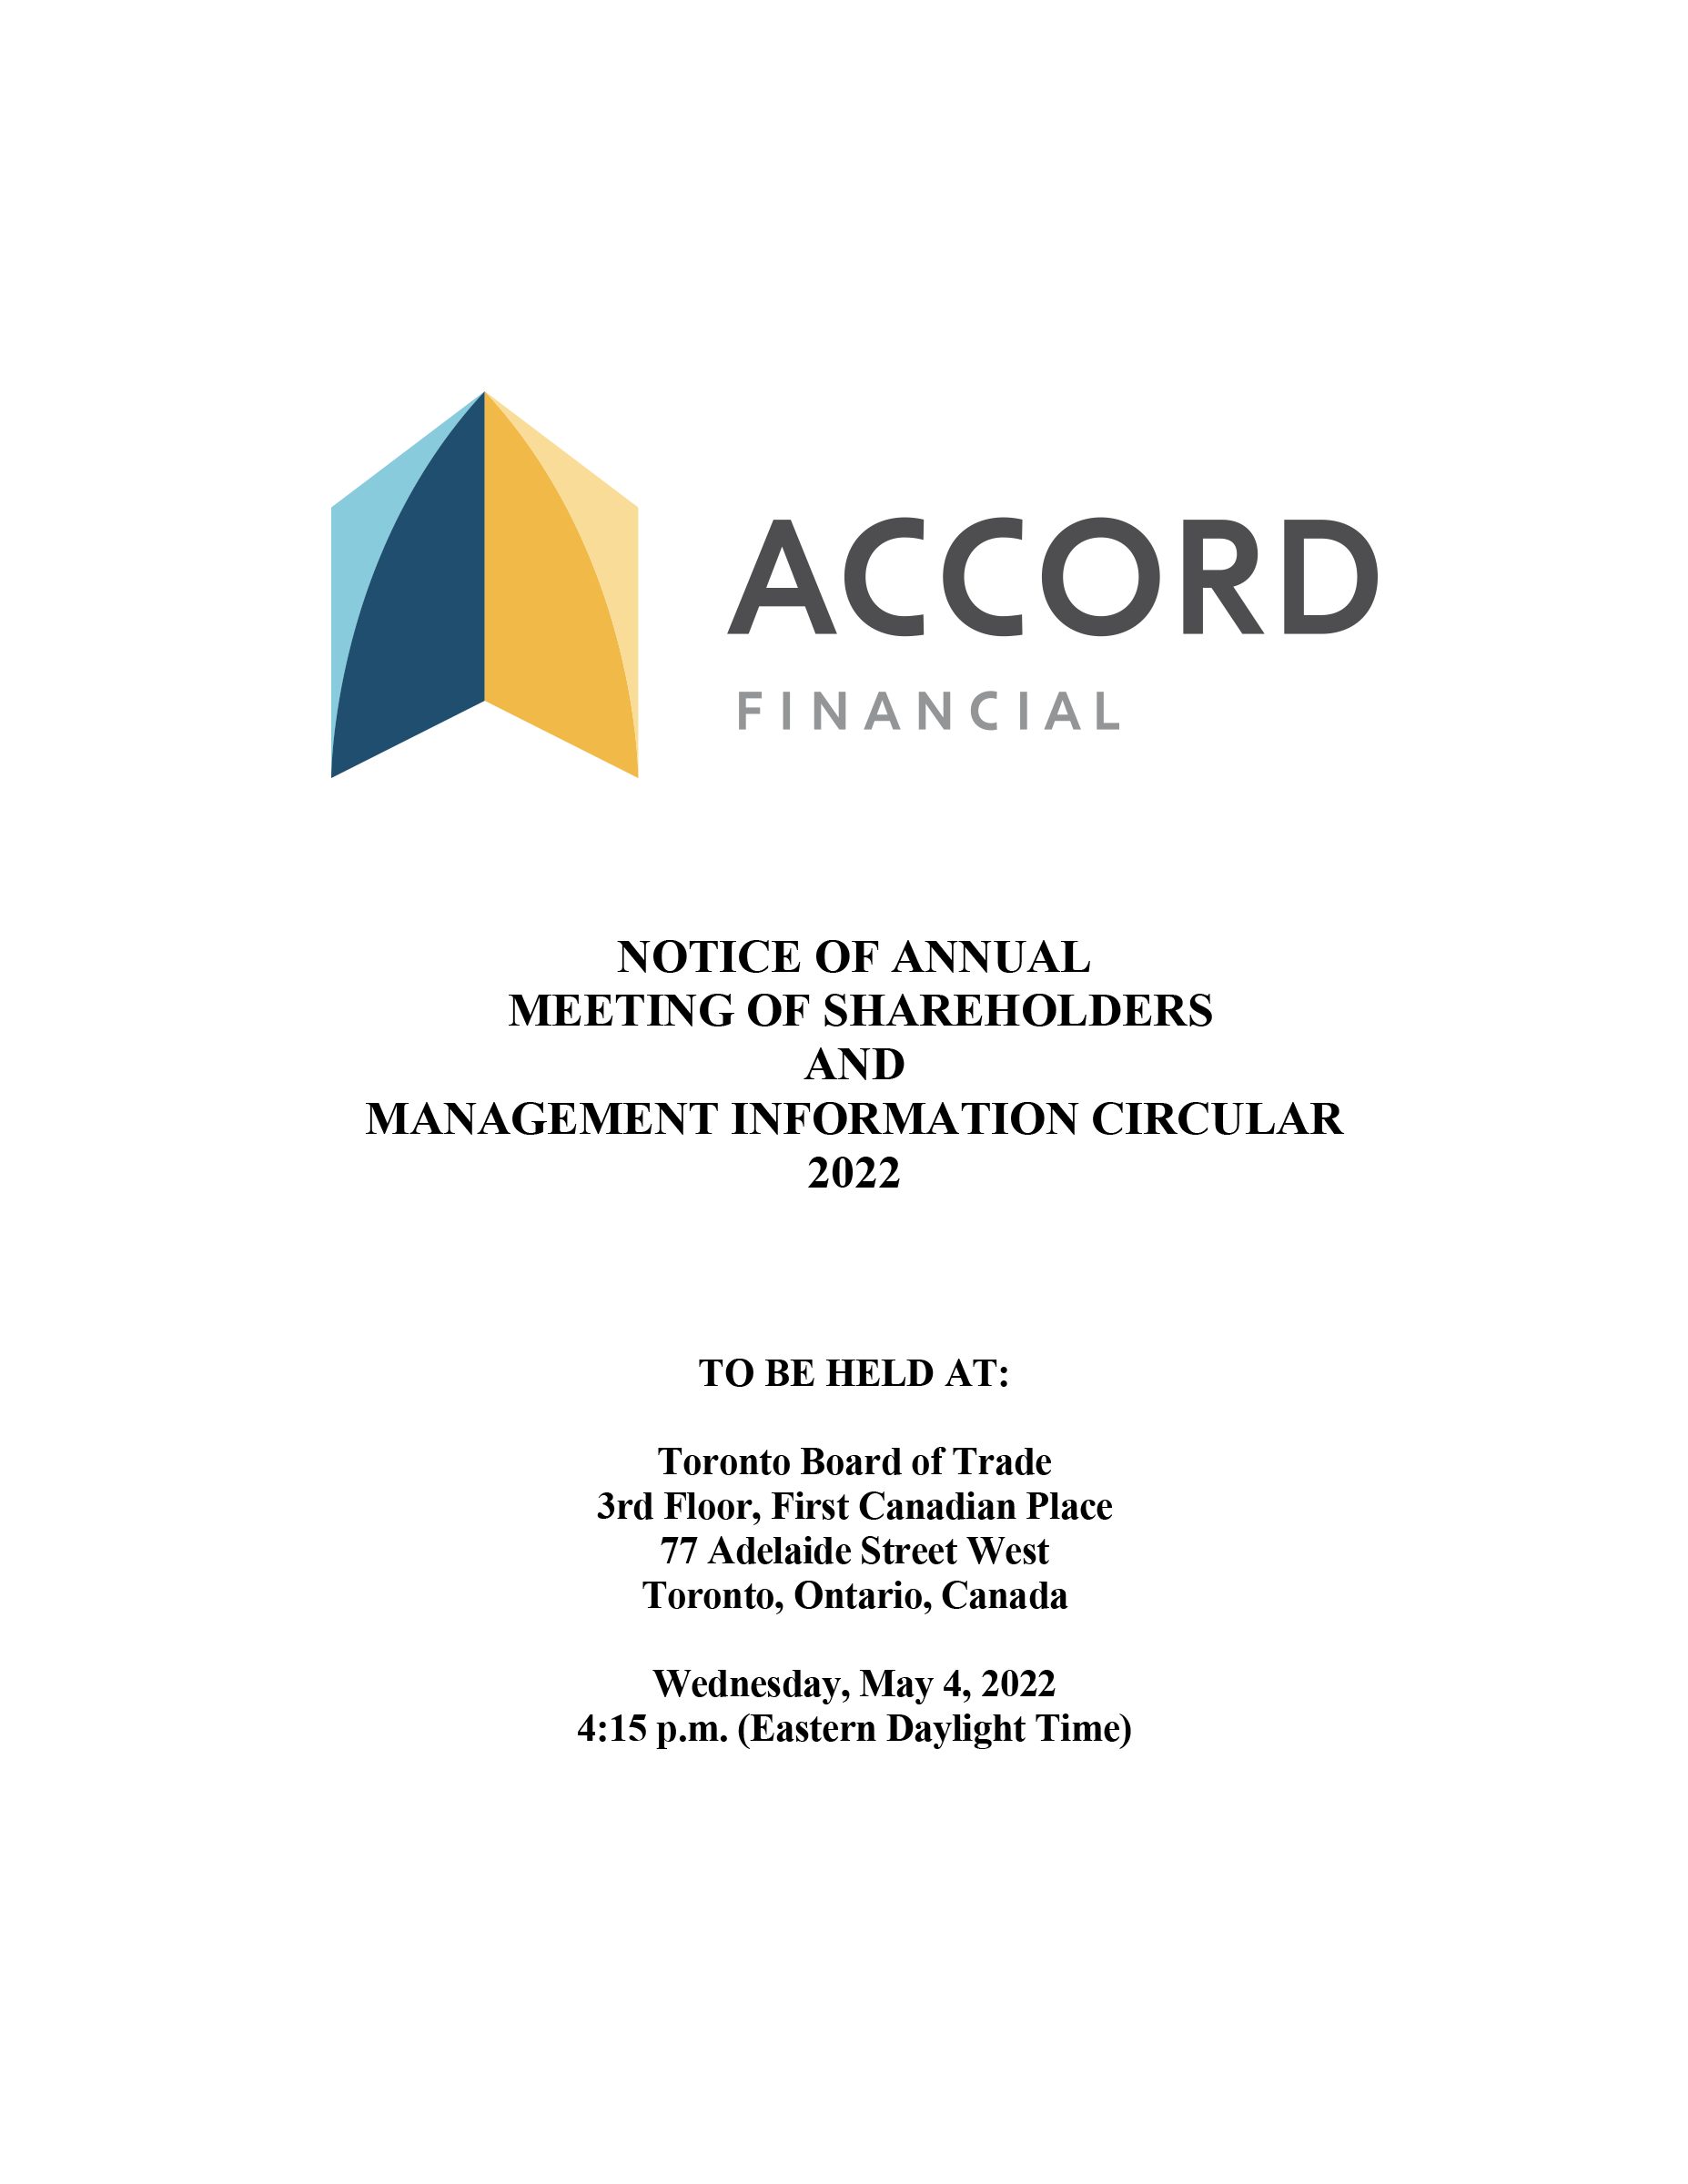 Accord management information circular 2022